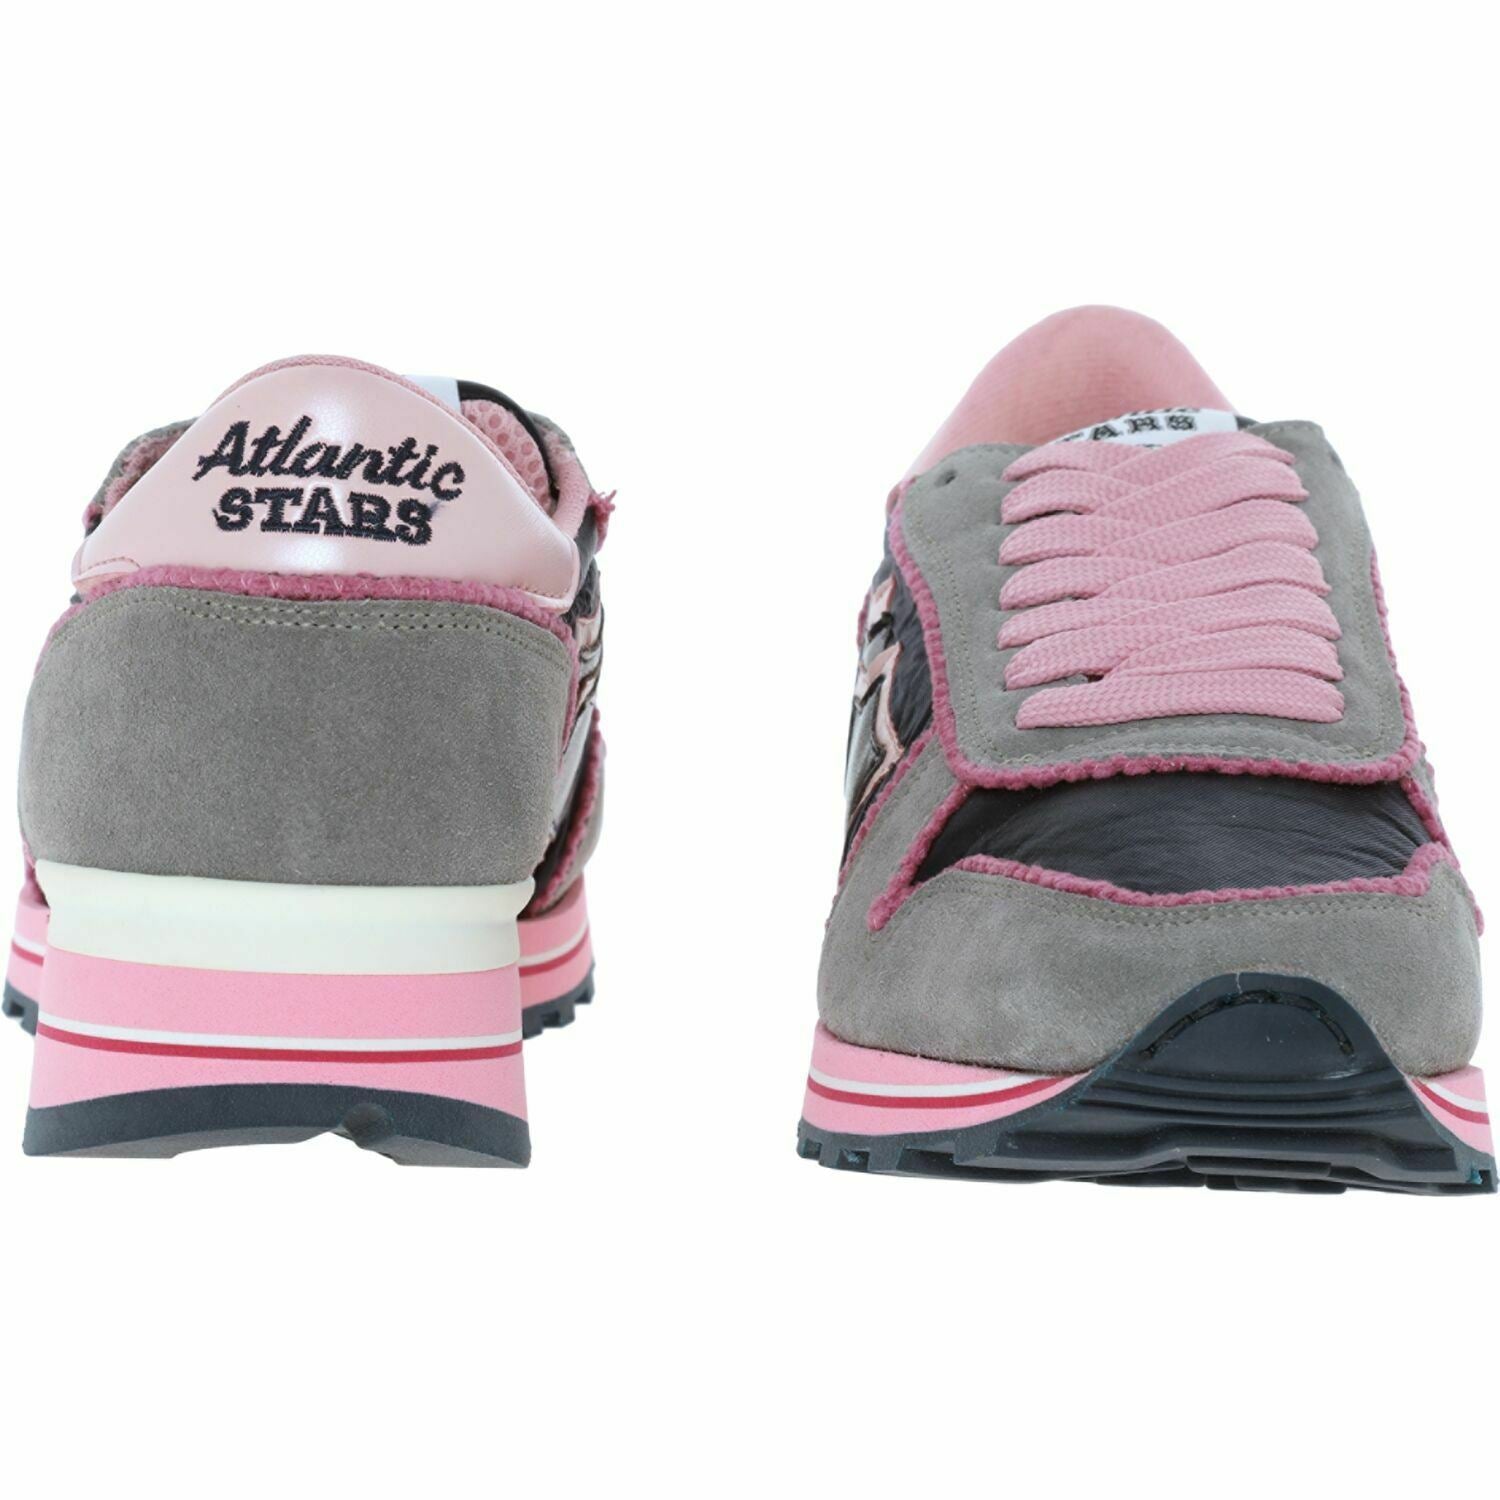 ATLANTIC STARS Womenâs ALHENA Trainers, Pink/Grey/Navy, size UK 4    RRP Â£220